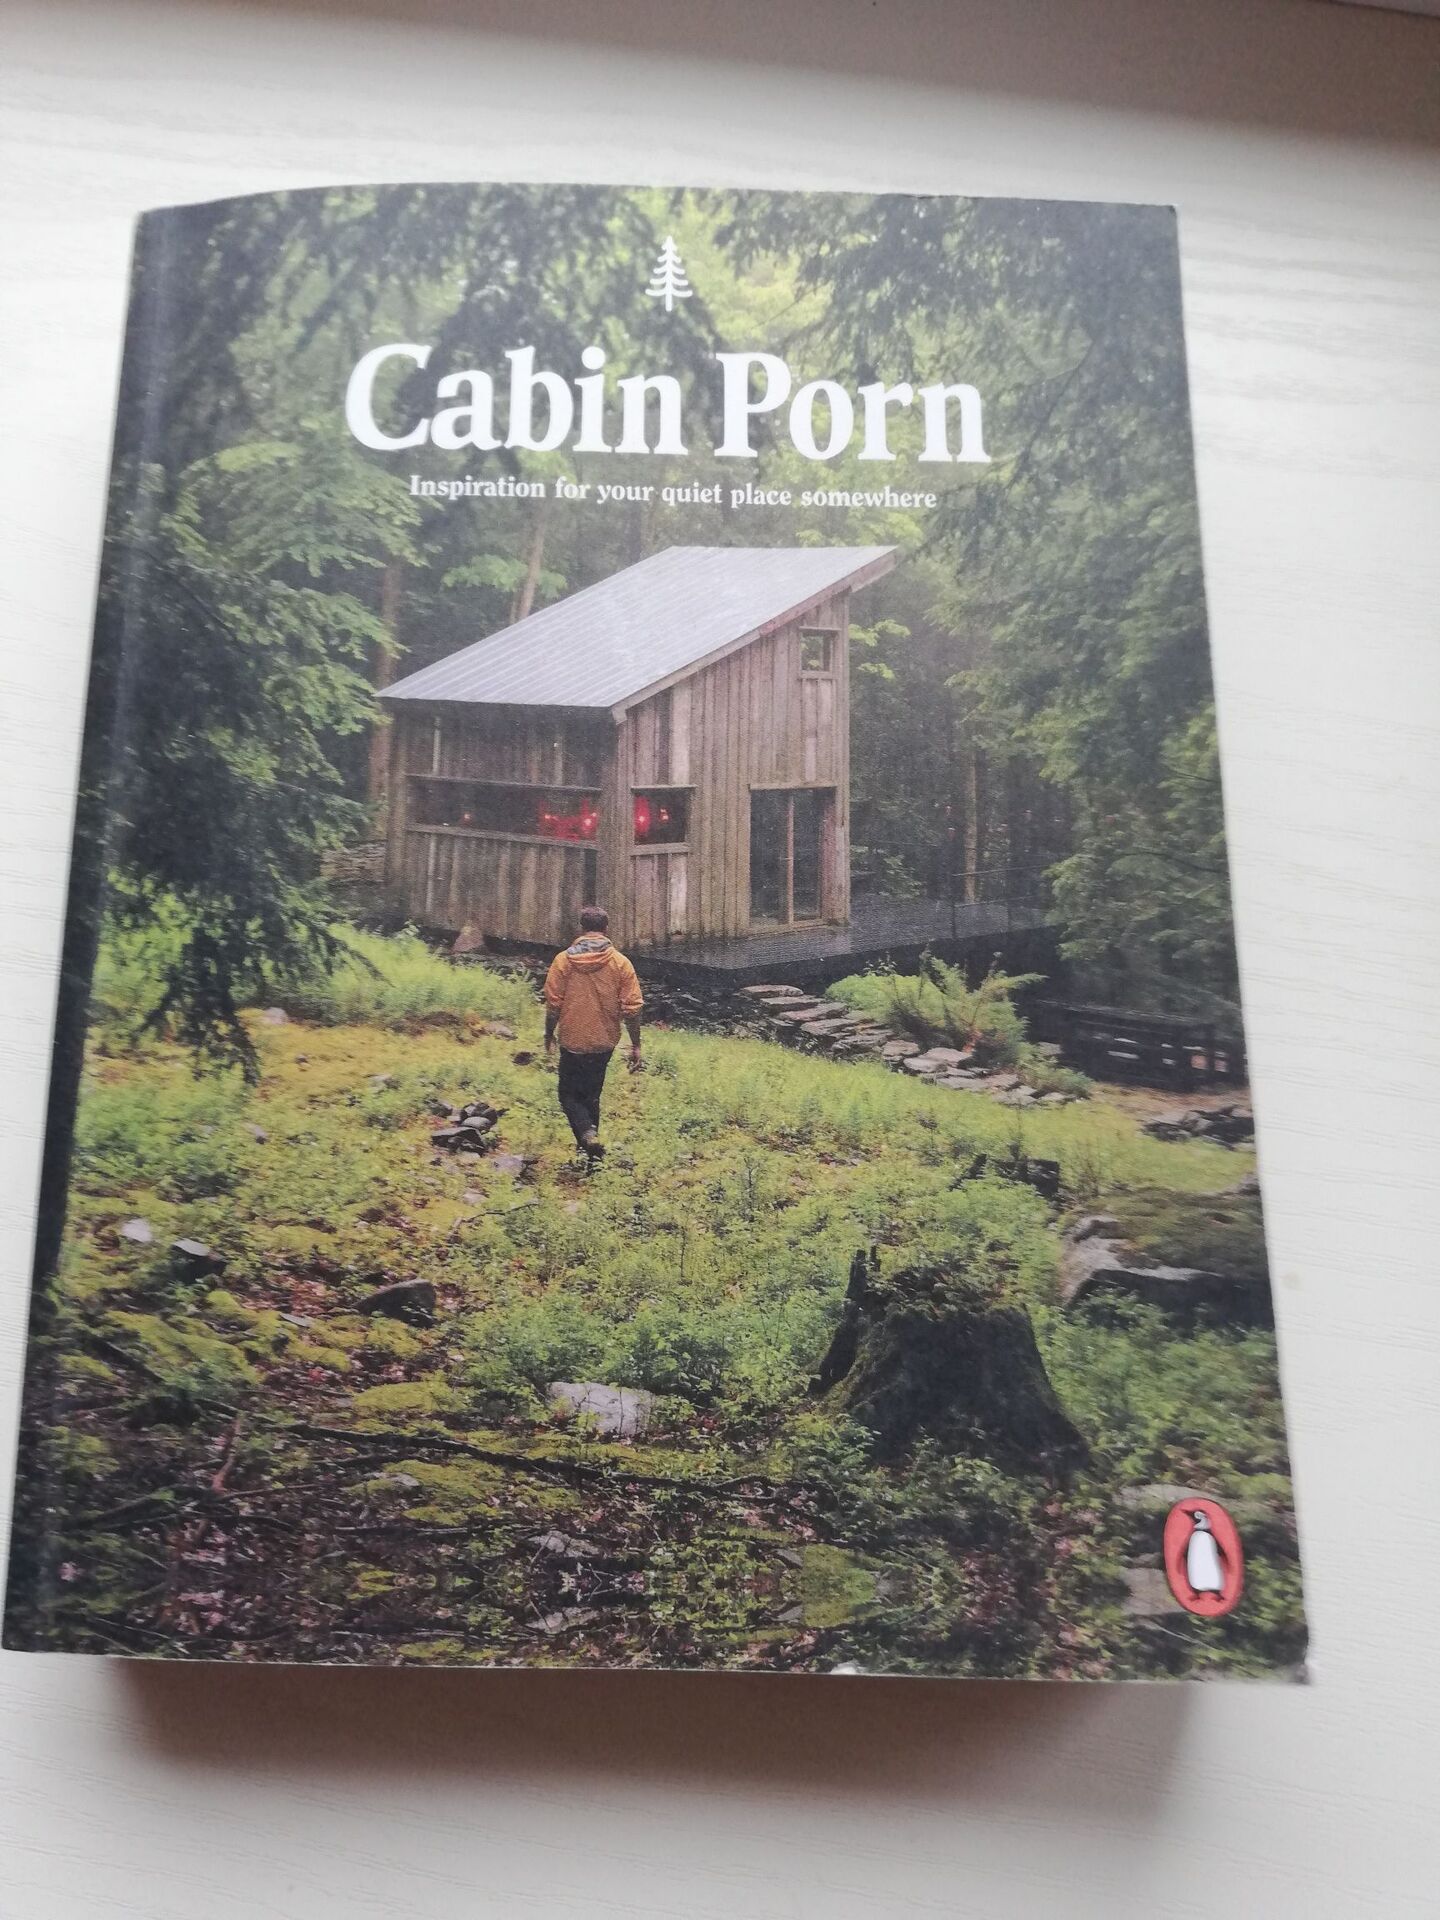 Scx Xxx Com - Cabin Porn. Inspiration for your quiet place somewhere (127500925) - Osta.ee